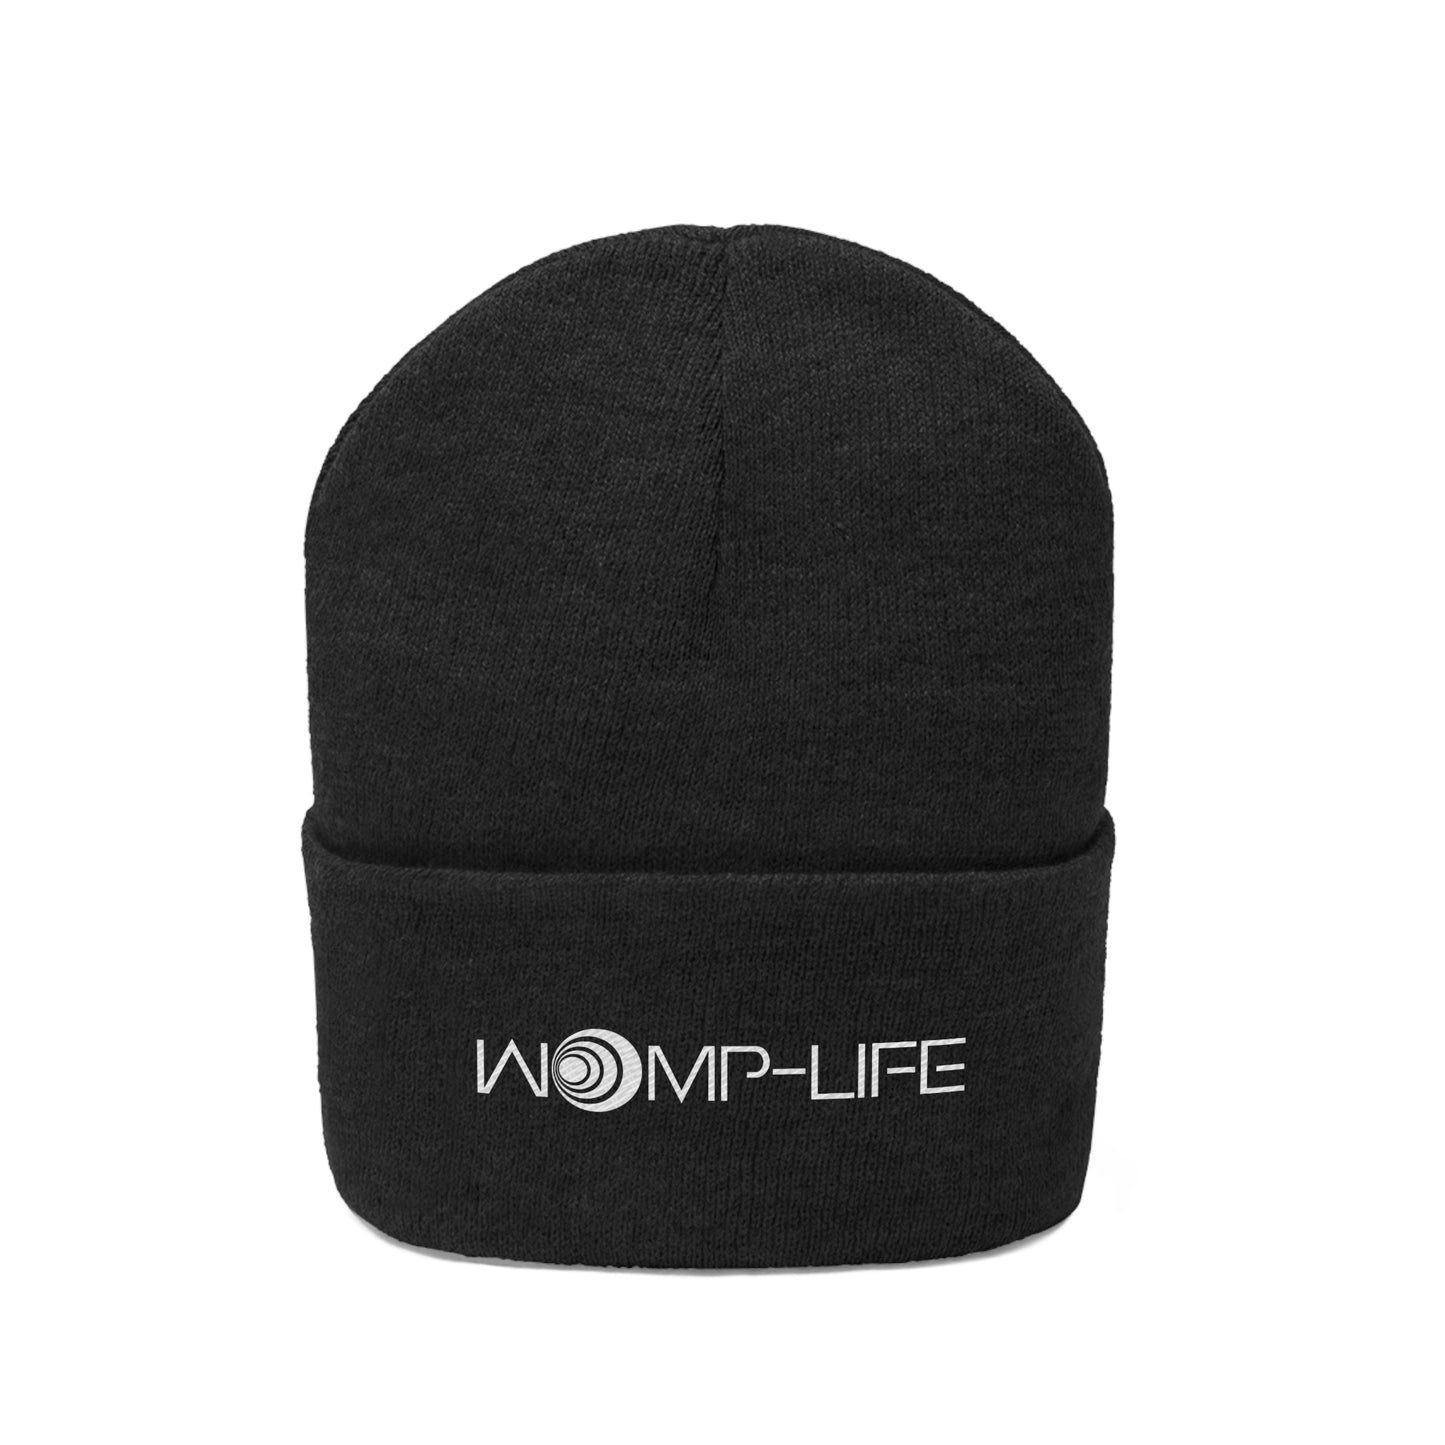 Womp-Life Knit Beanie